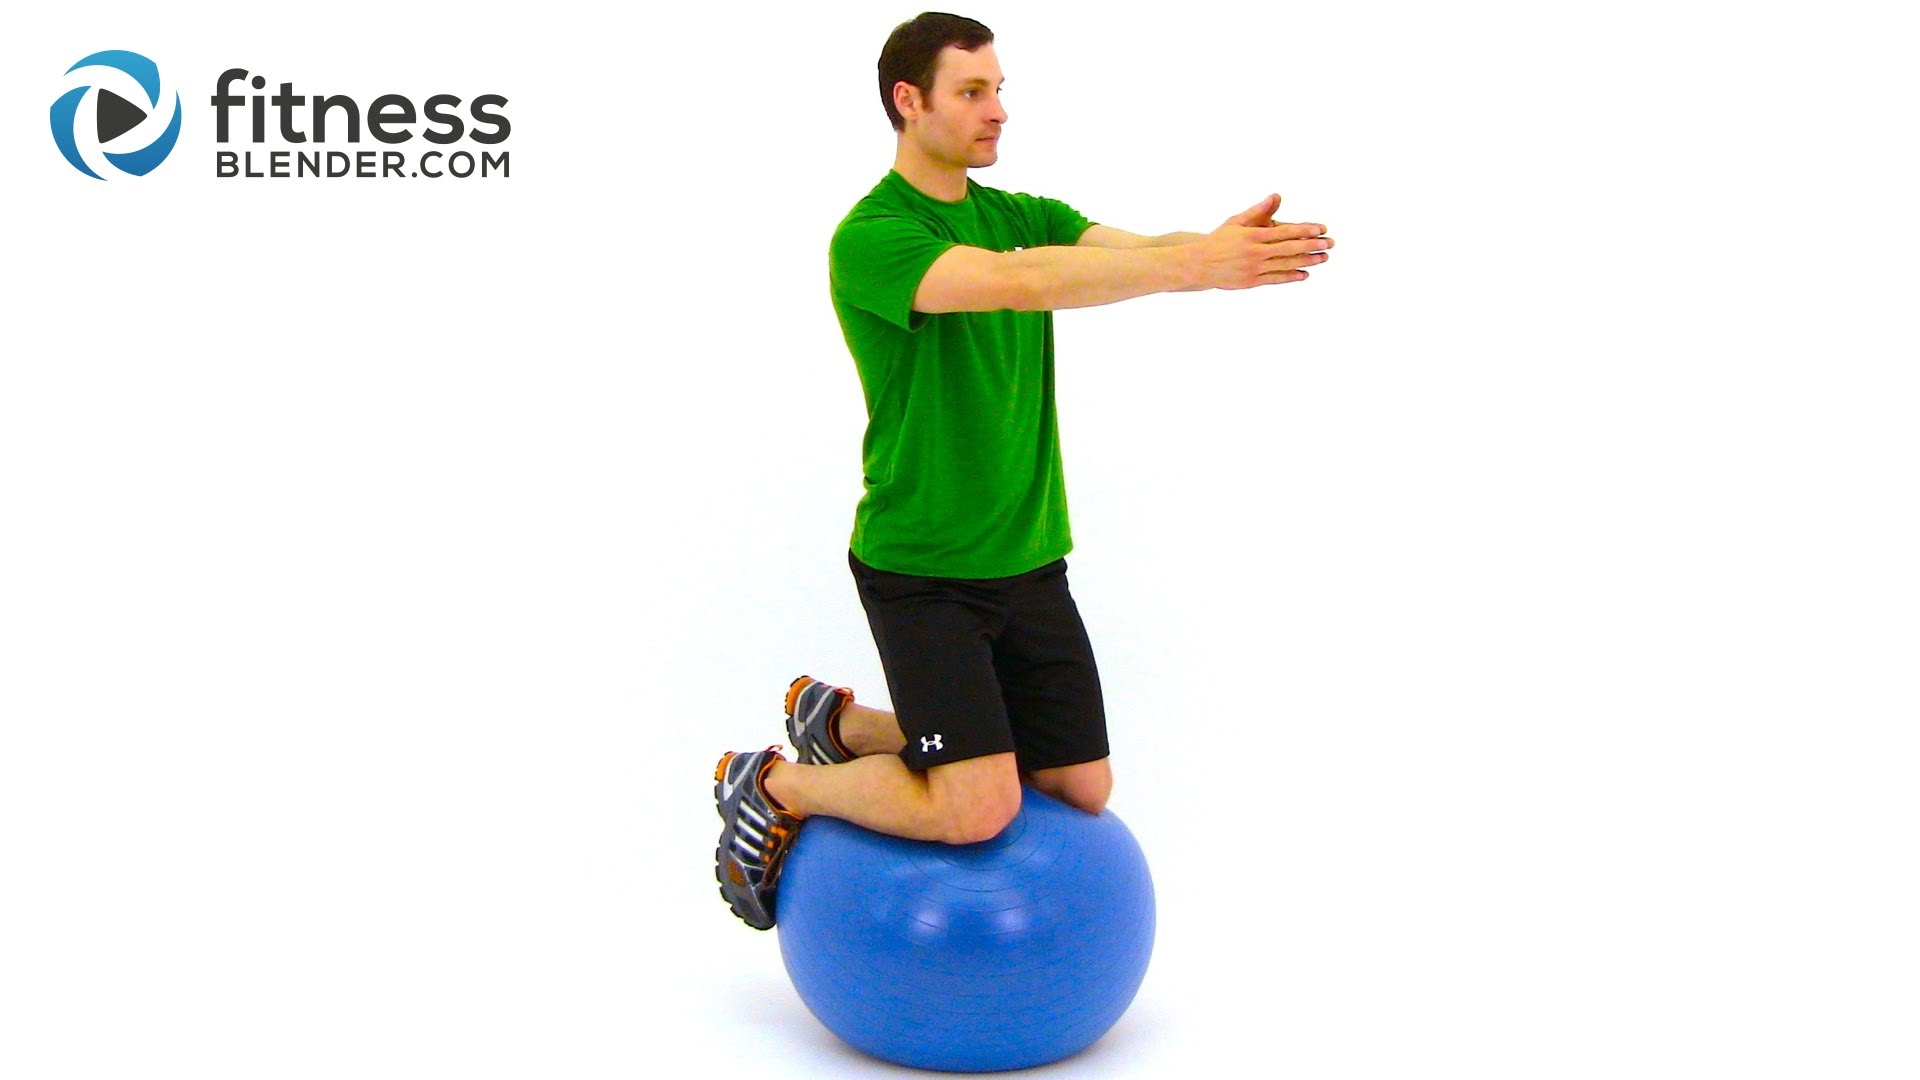 Advanced Balance Workout - Agility Exercises to Increase Balance and ...